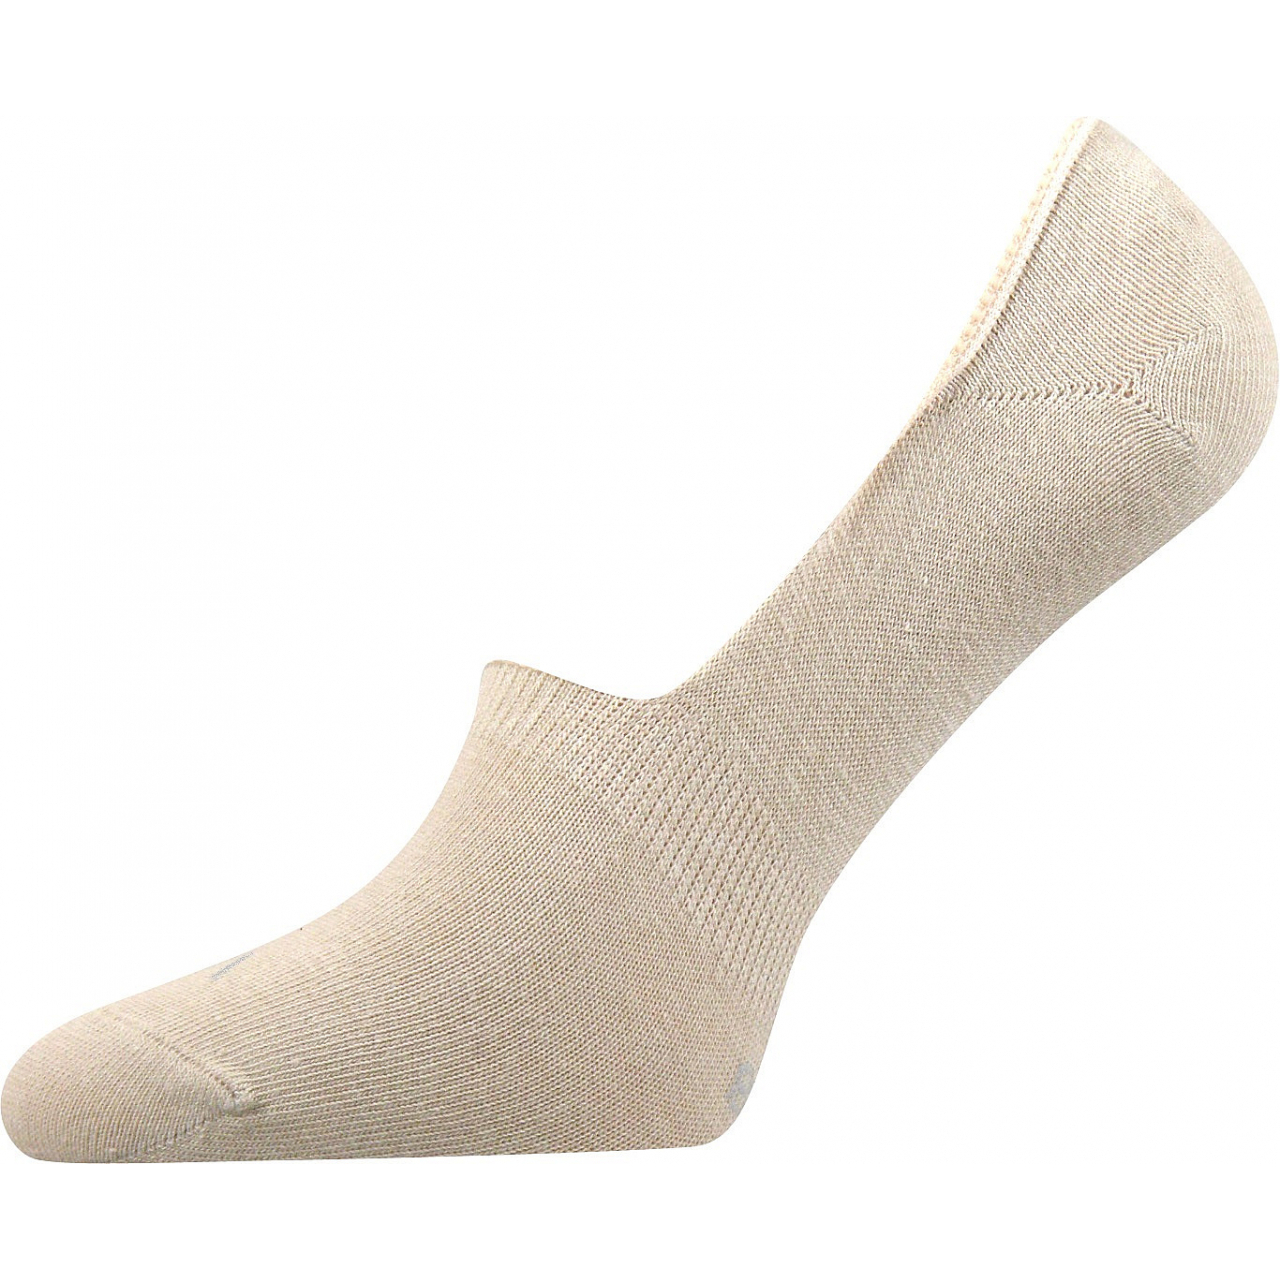 Ponožky unisex Voxx Verti - béžové, 43-46